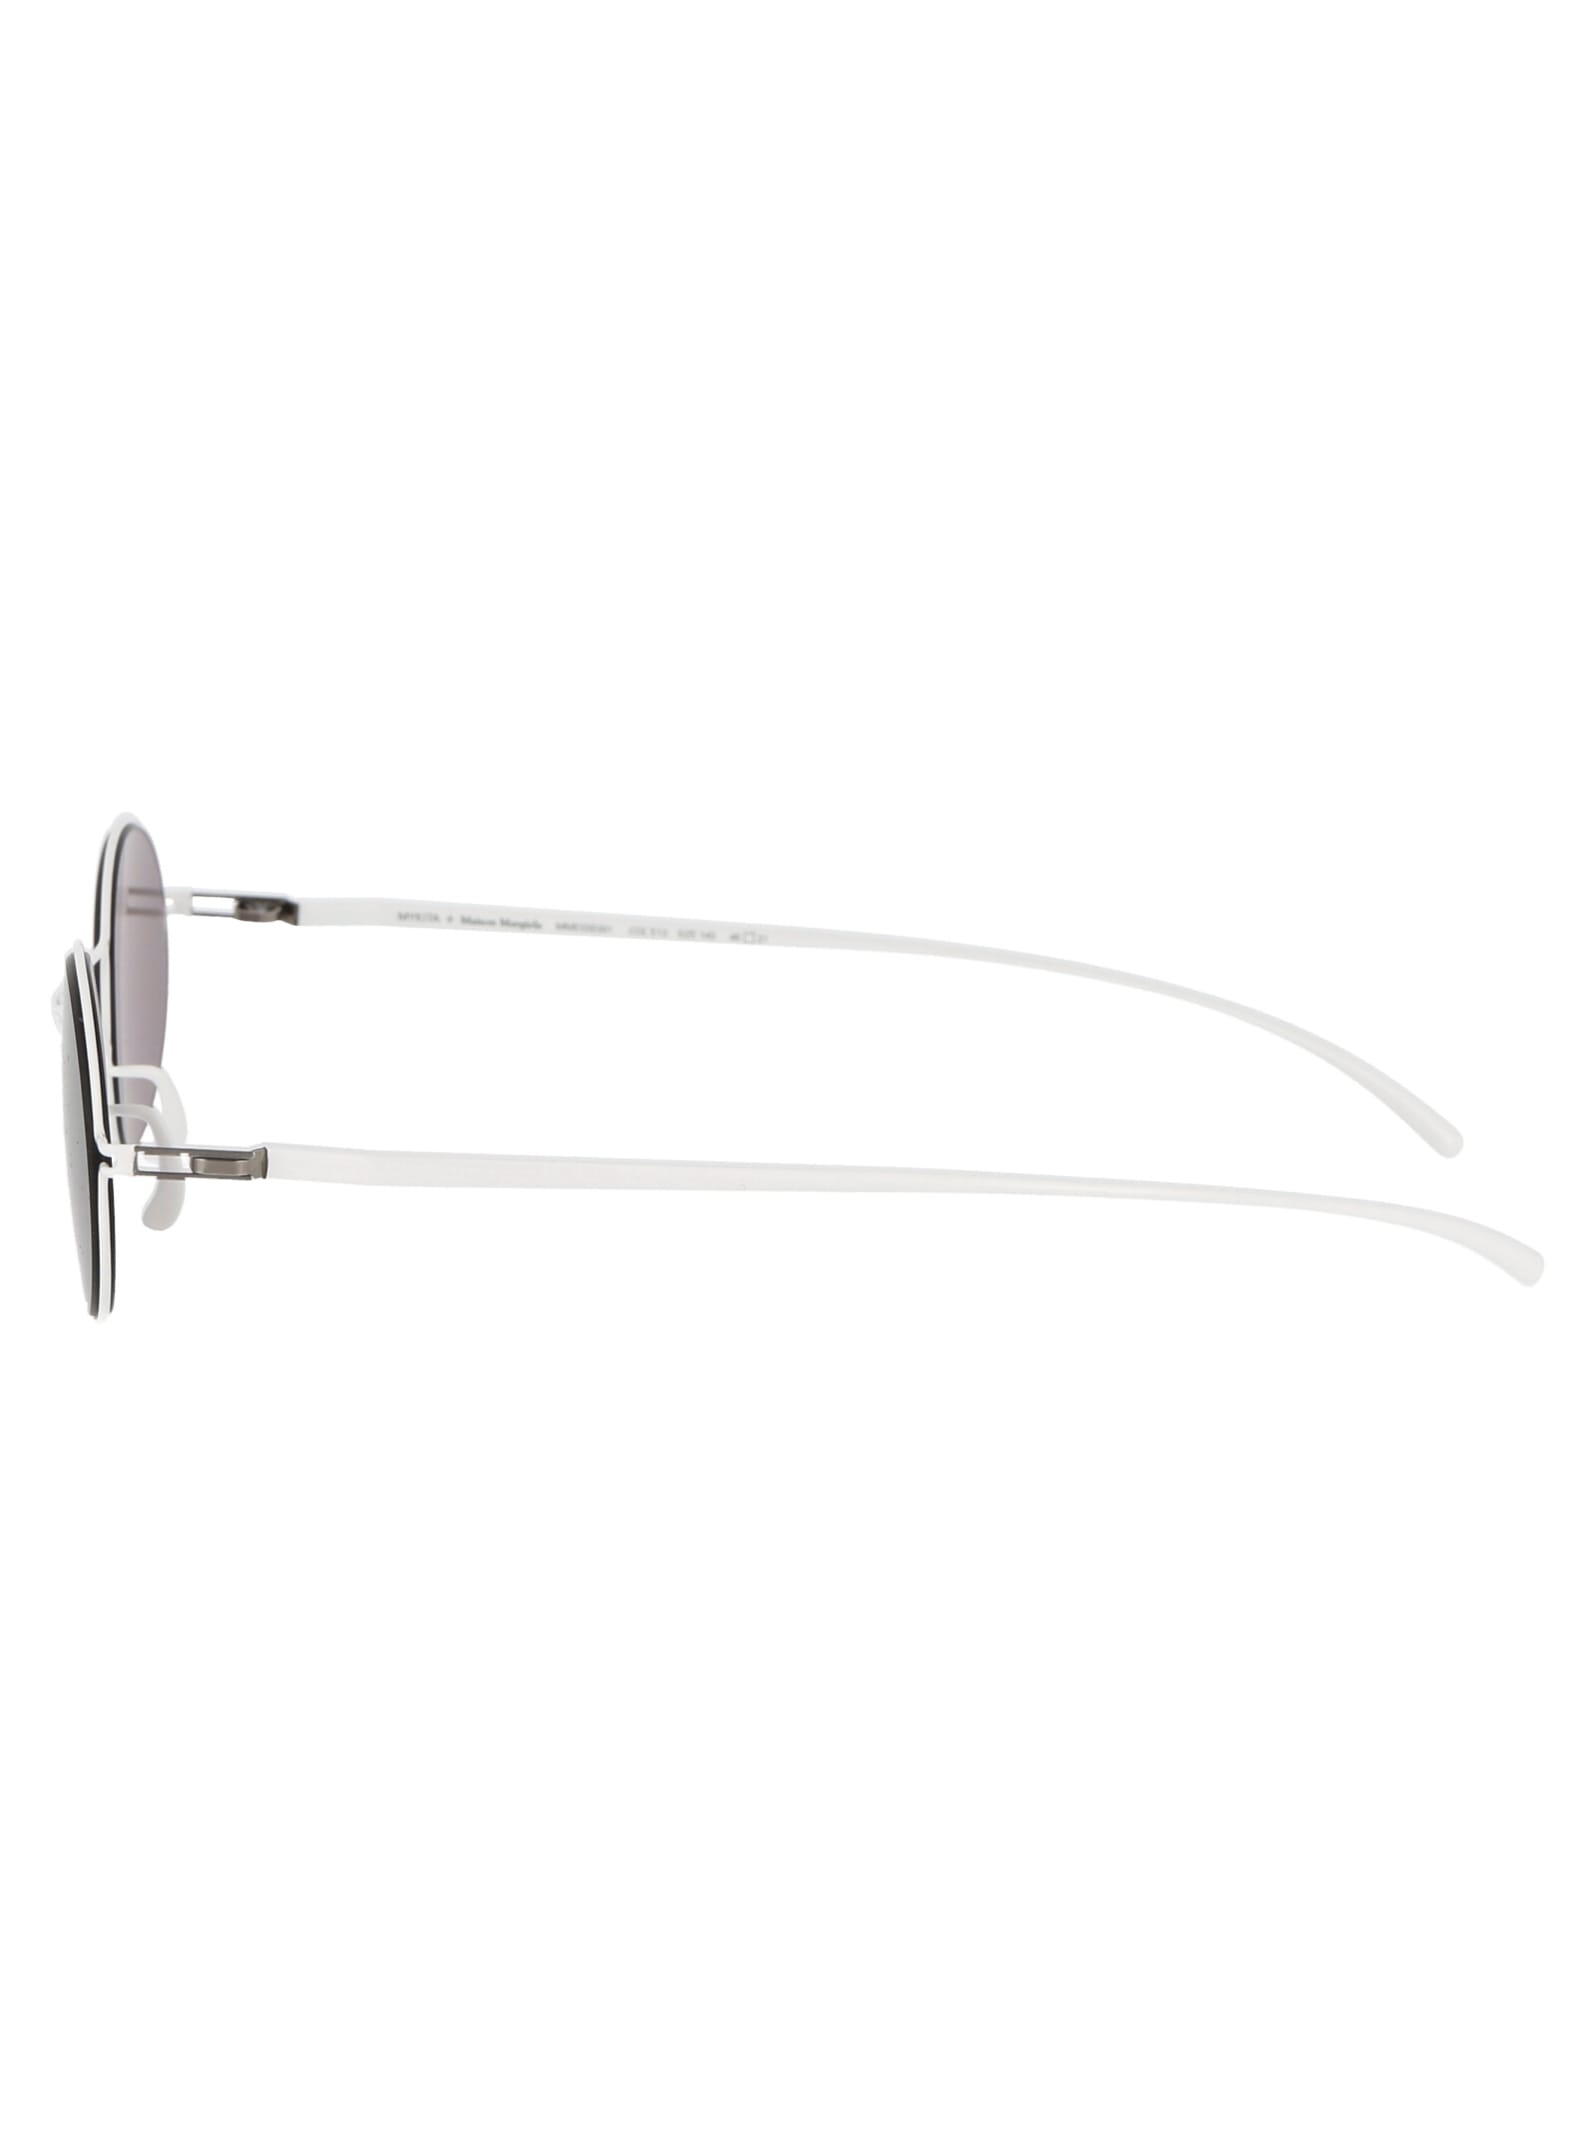 Shop Mykita Mmesse001 Sunglasses In 333 E13 White Warm Grey Flash